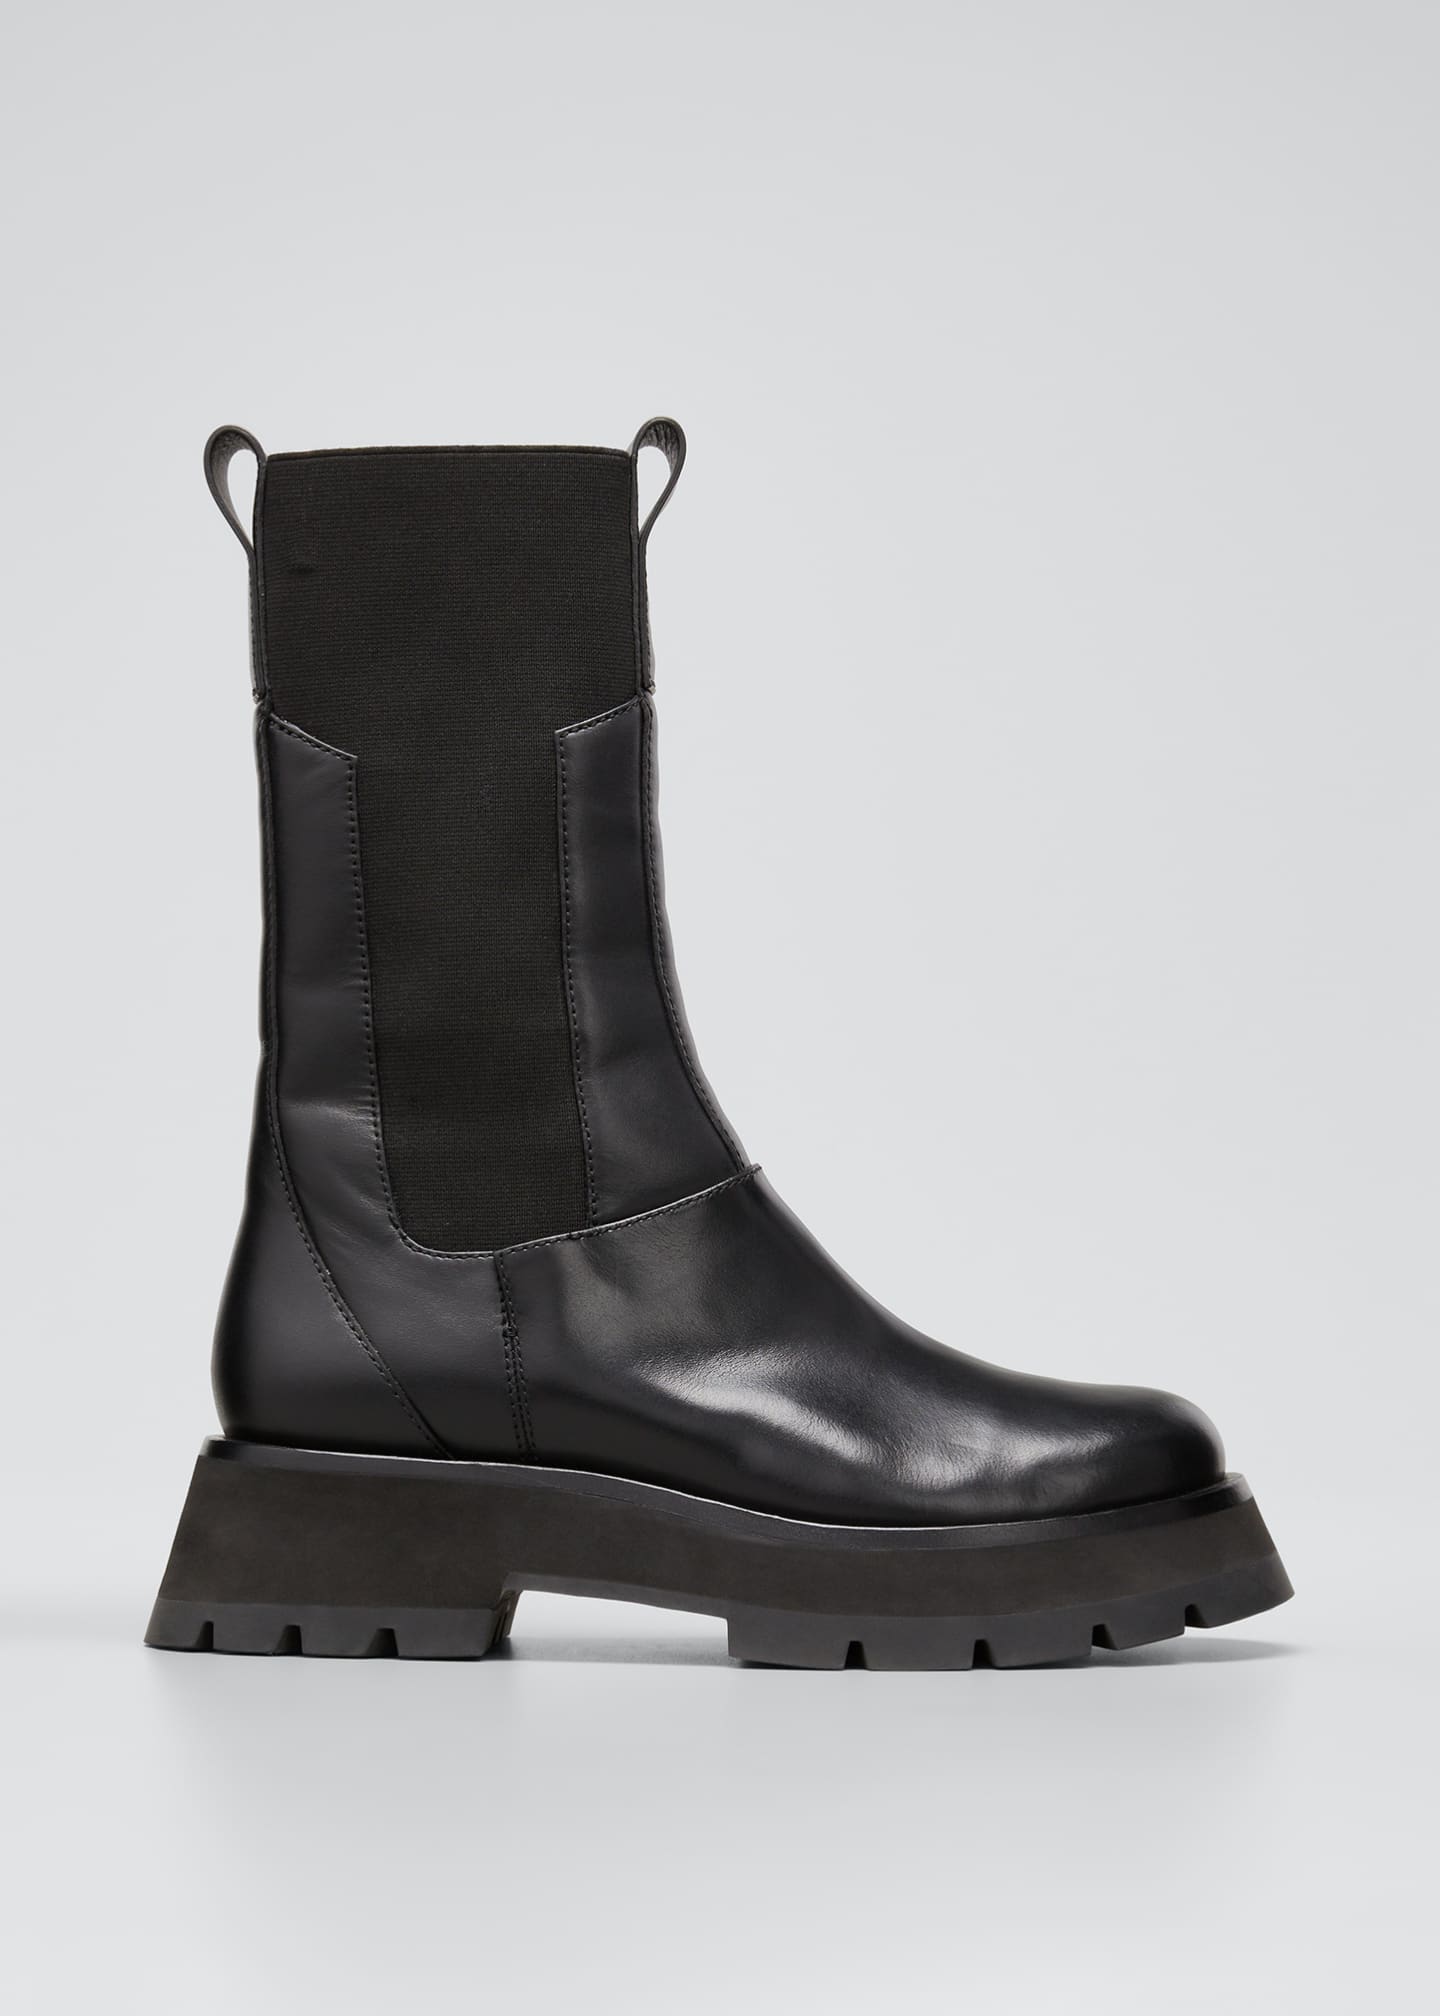 3.1 Phillip Lim Kate Stretch Leather Combat Boots - Bergdorf Goodman